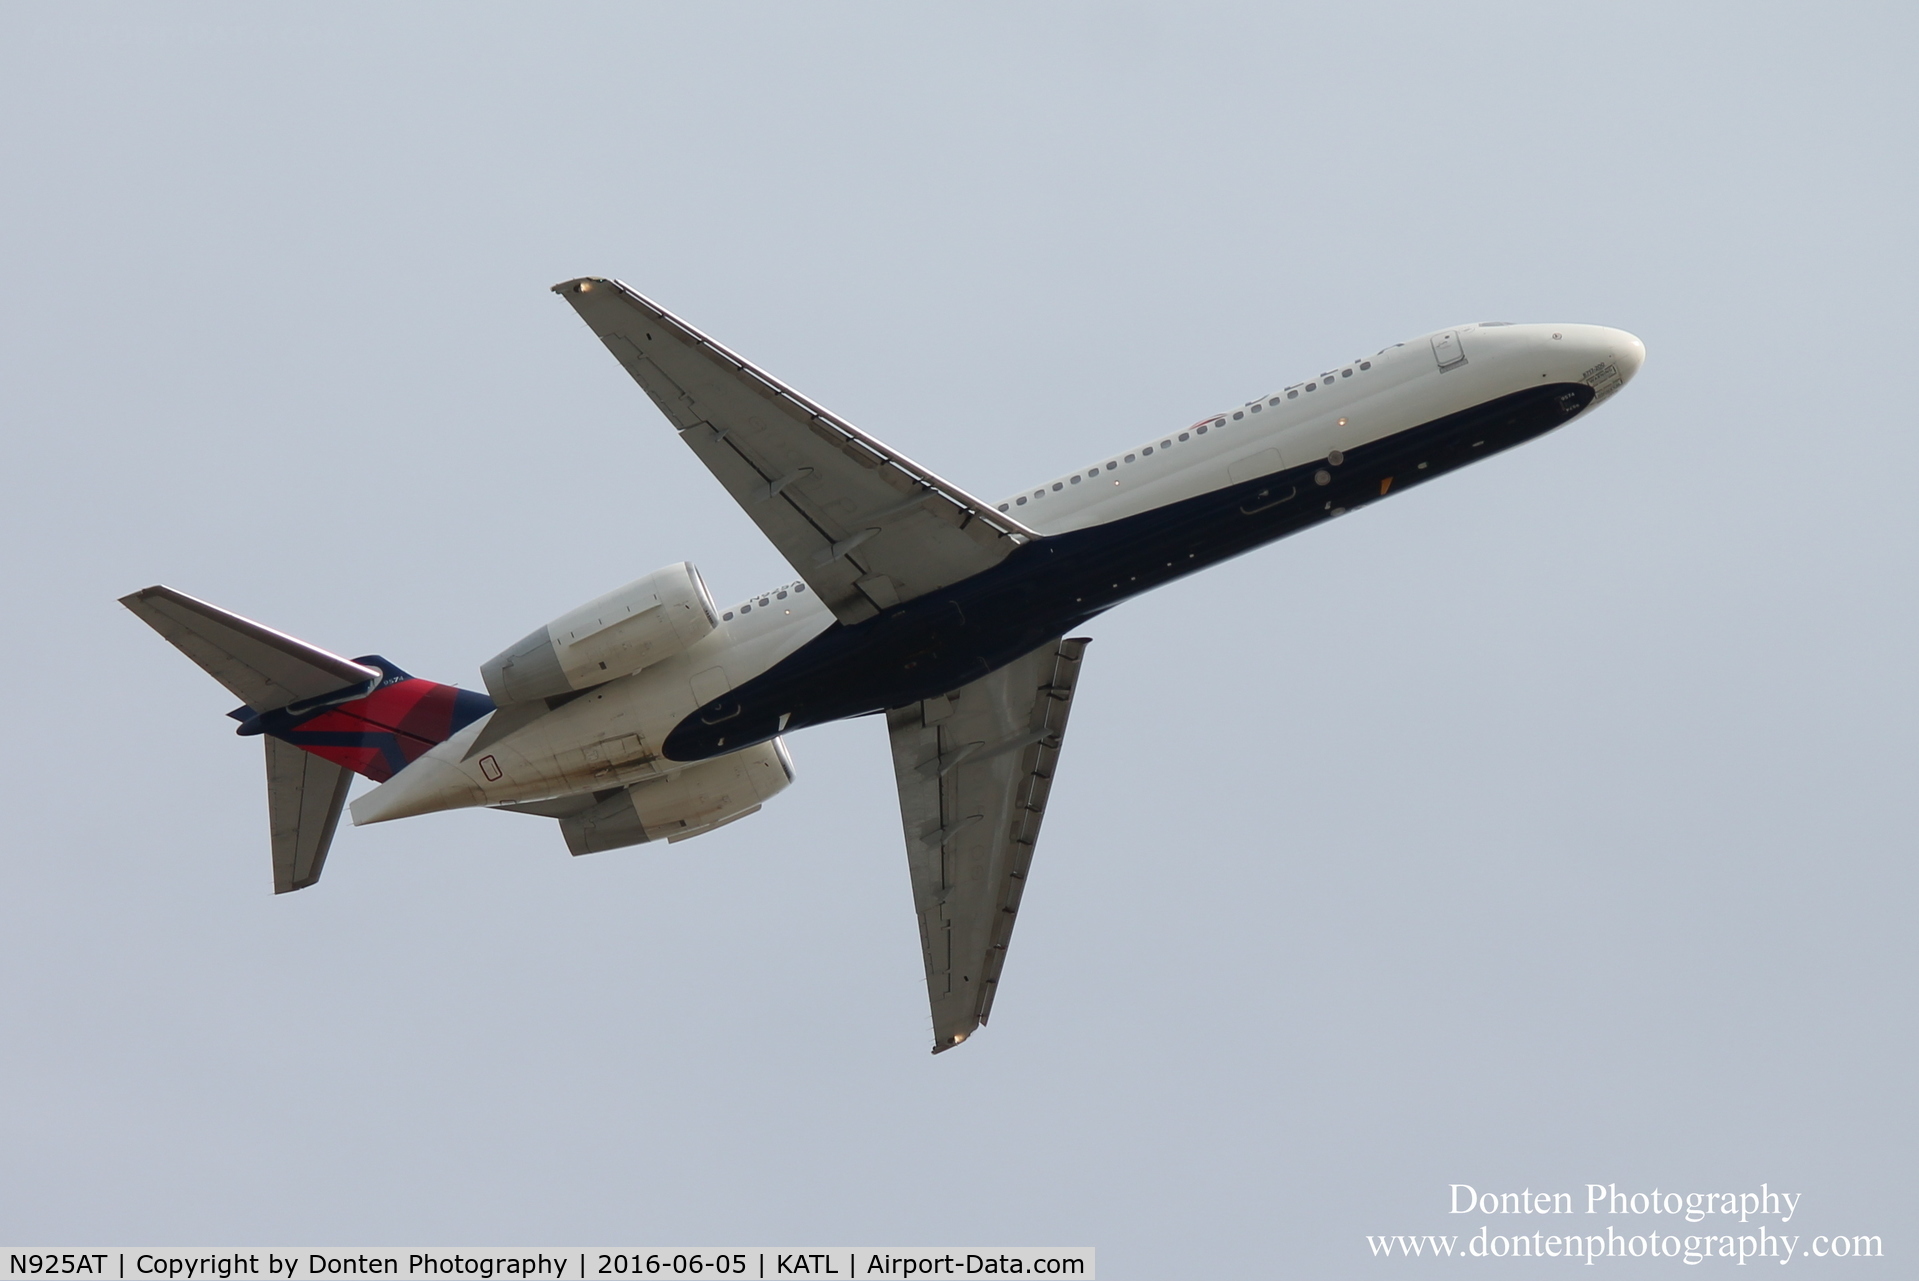 N925AT, 2000 Boeing 717-200 C/N 55079, Delta Flight 1403 (N925AT) departs Hartsfield-Jackson Atlanta International Airport enroute to Northwest Florida Beaches Airport